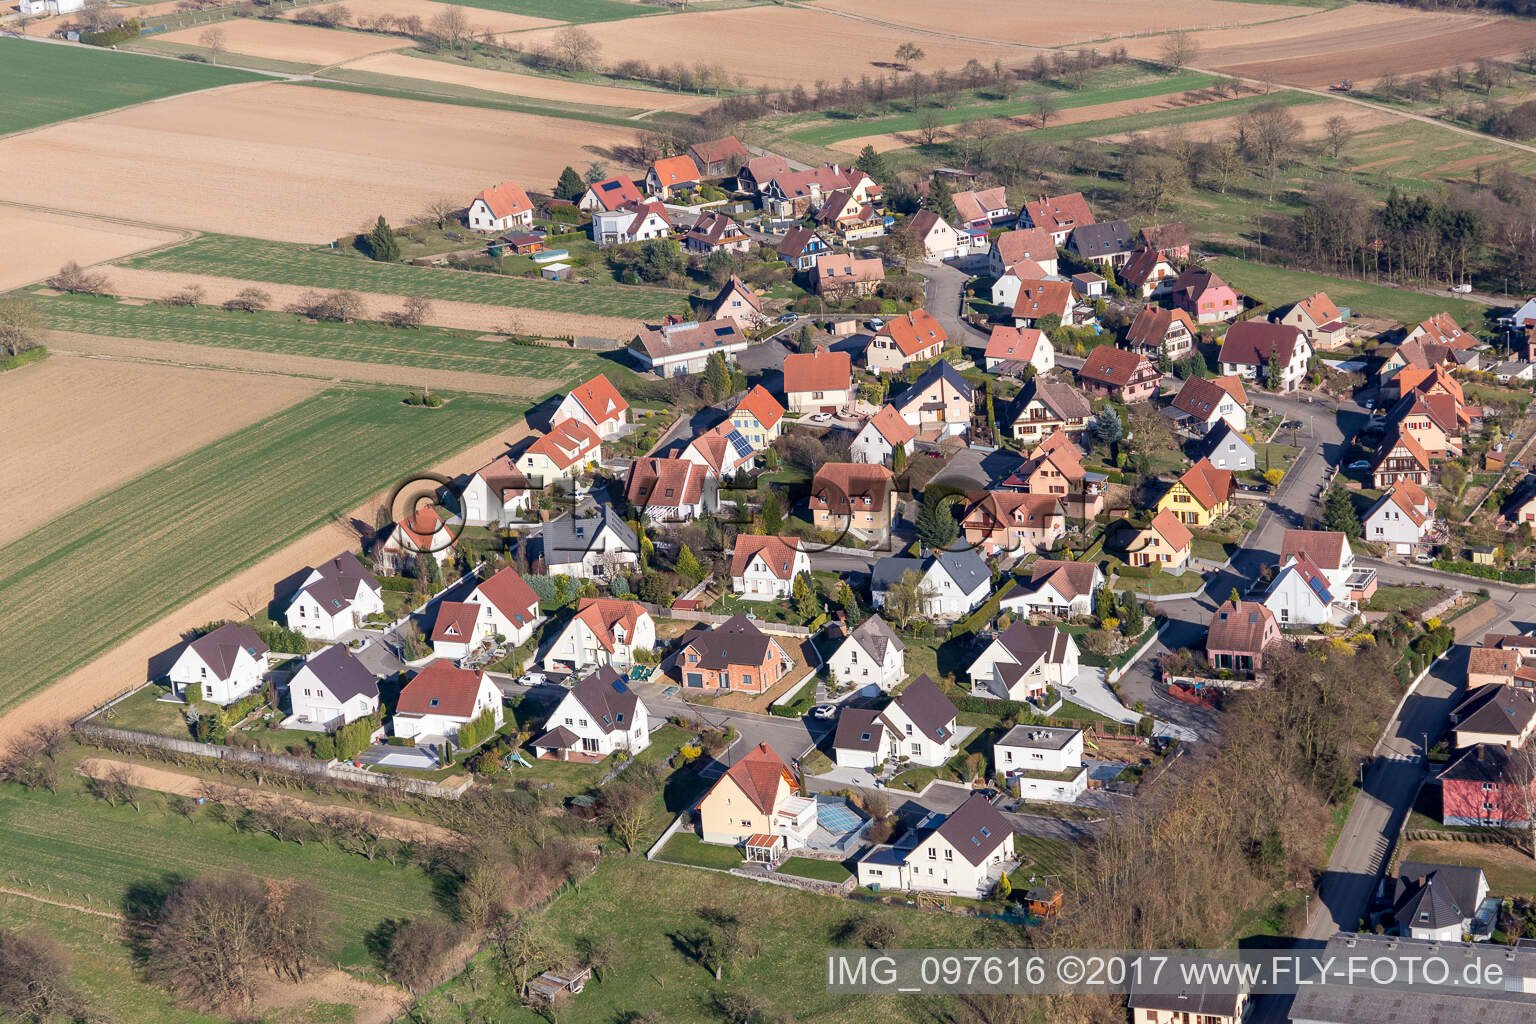 Drone image of Schwindratzheim in the state Bas-Rhin, France